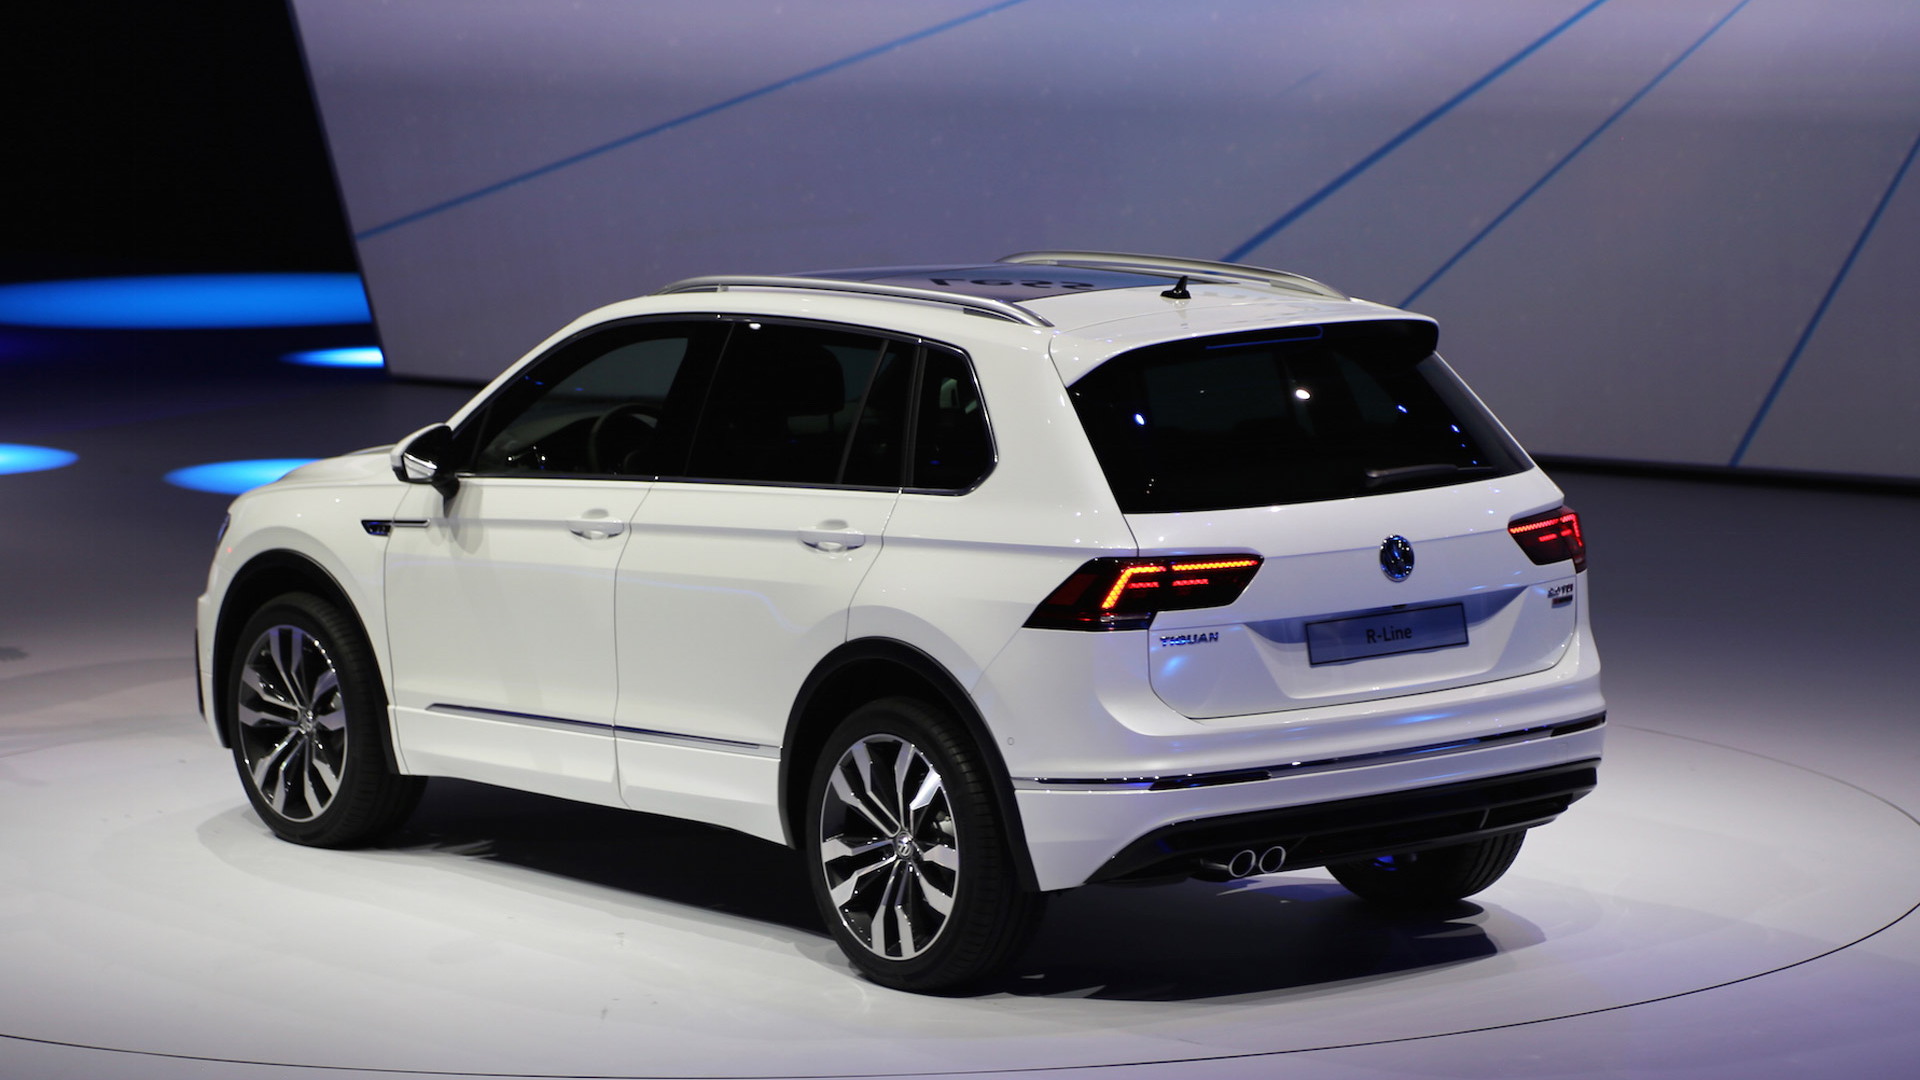 New Volkswagen Tiguan unveiled at 2015 Frankfurt auto show